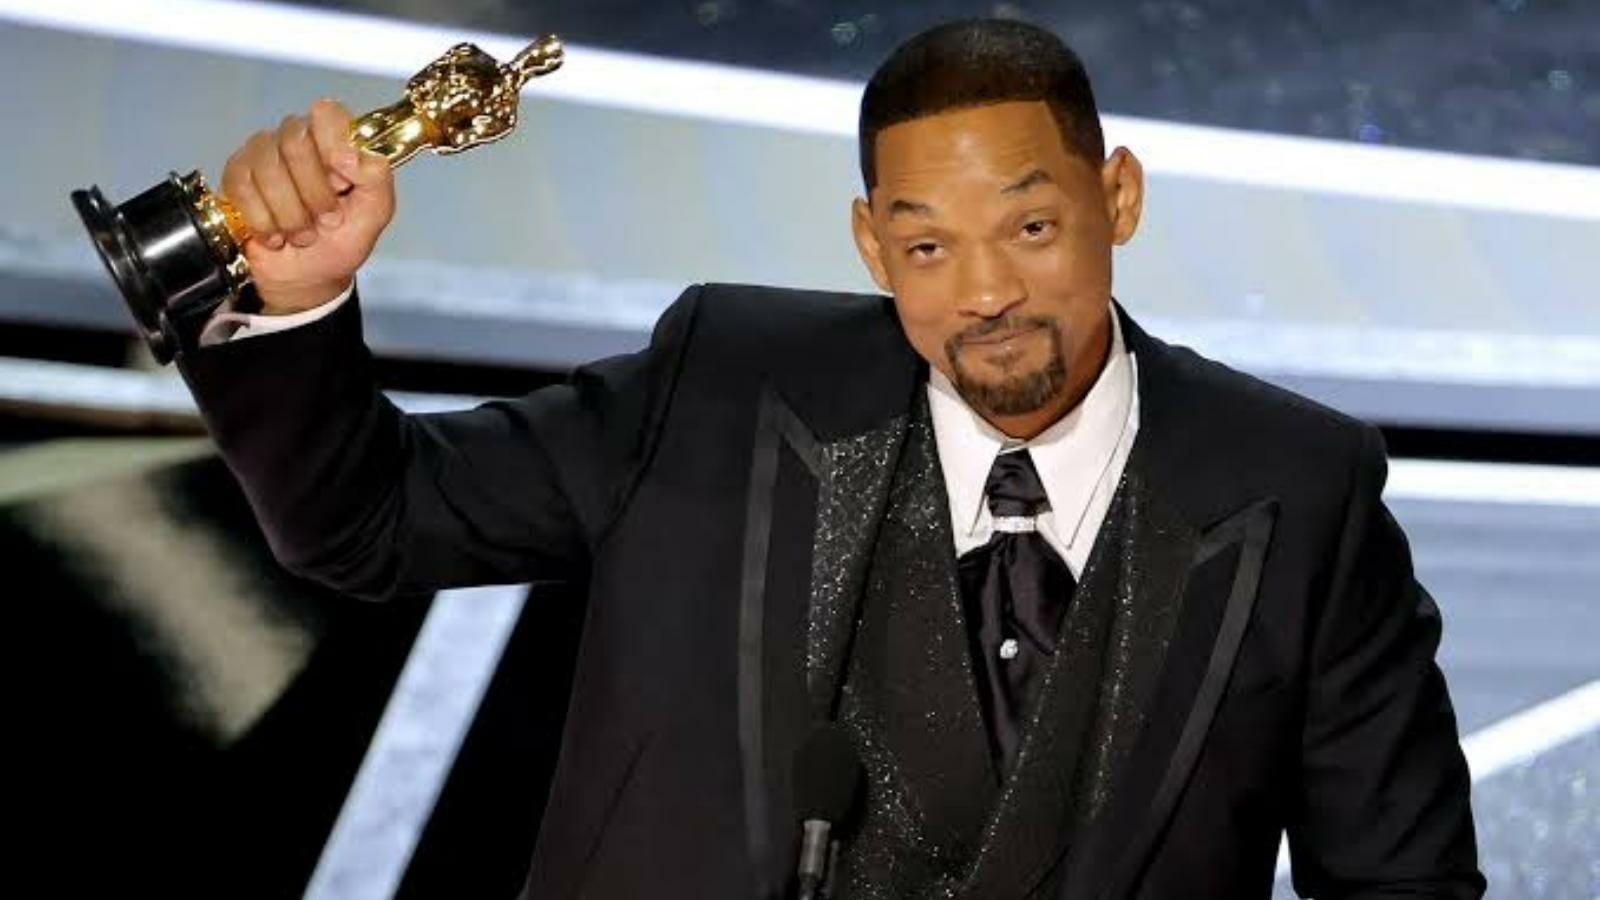 Will Smith received an Oscar